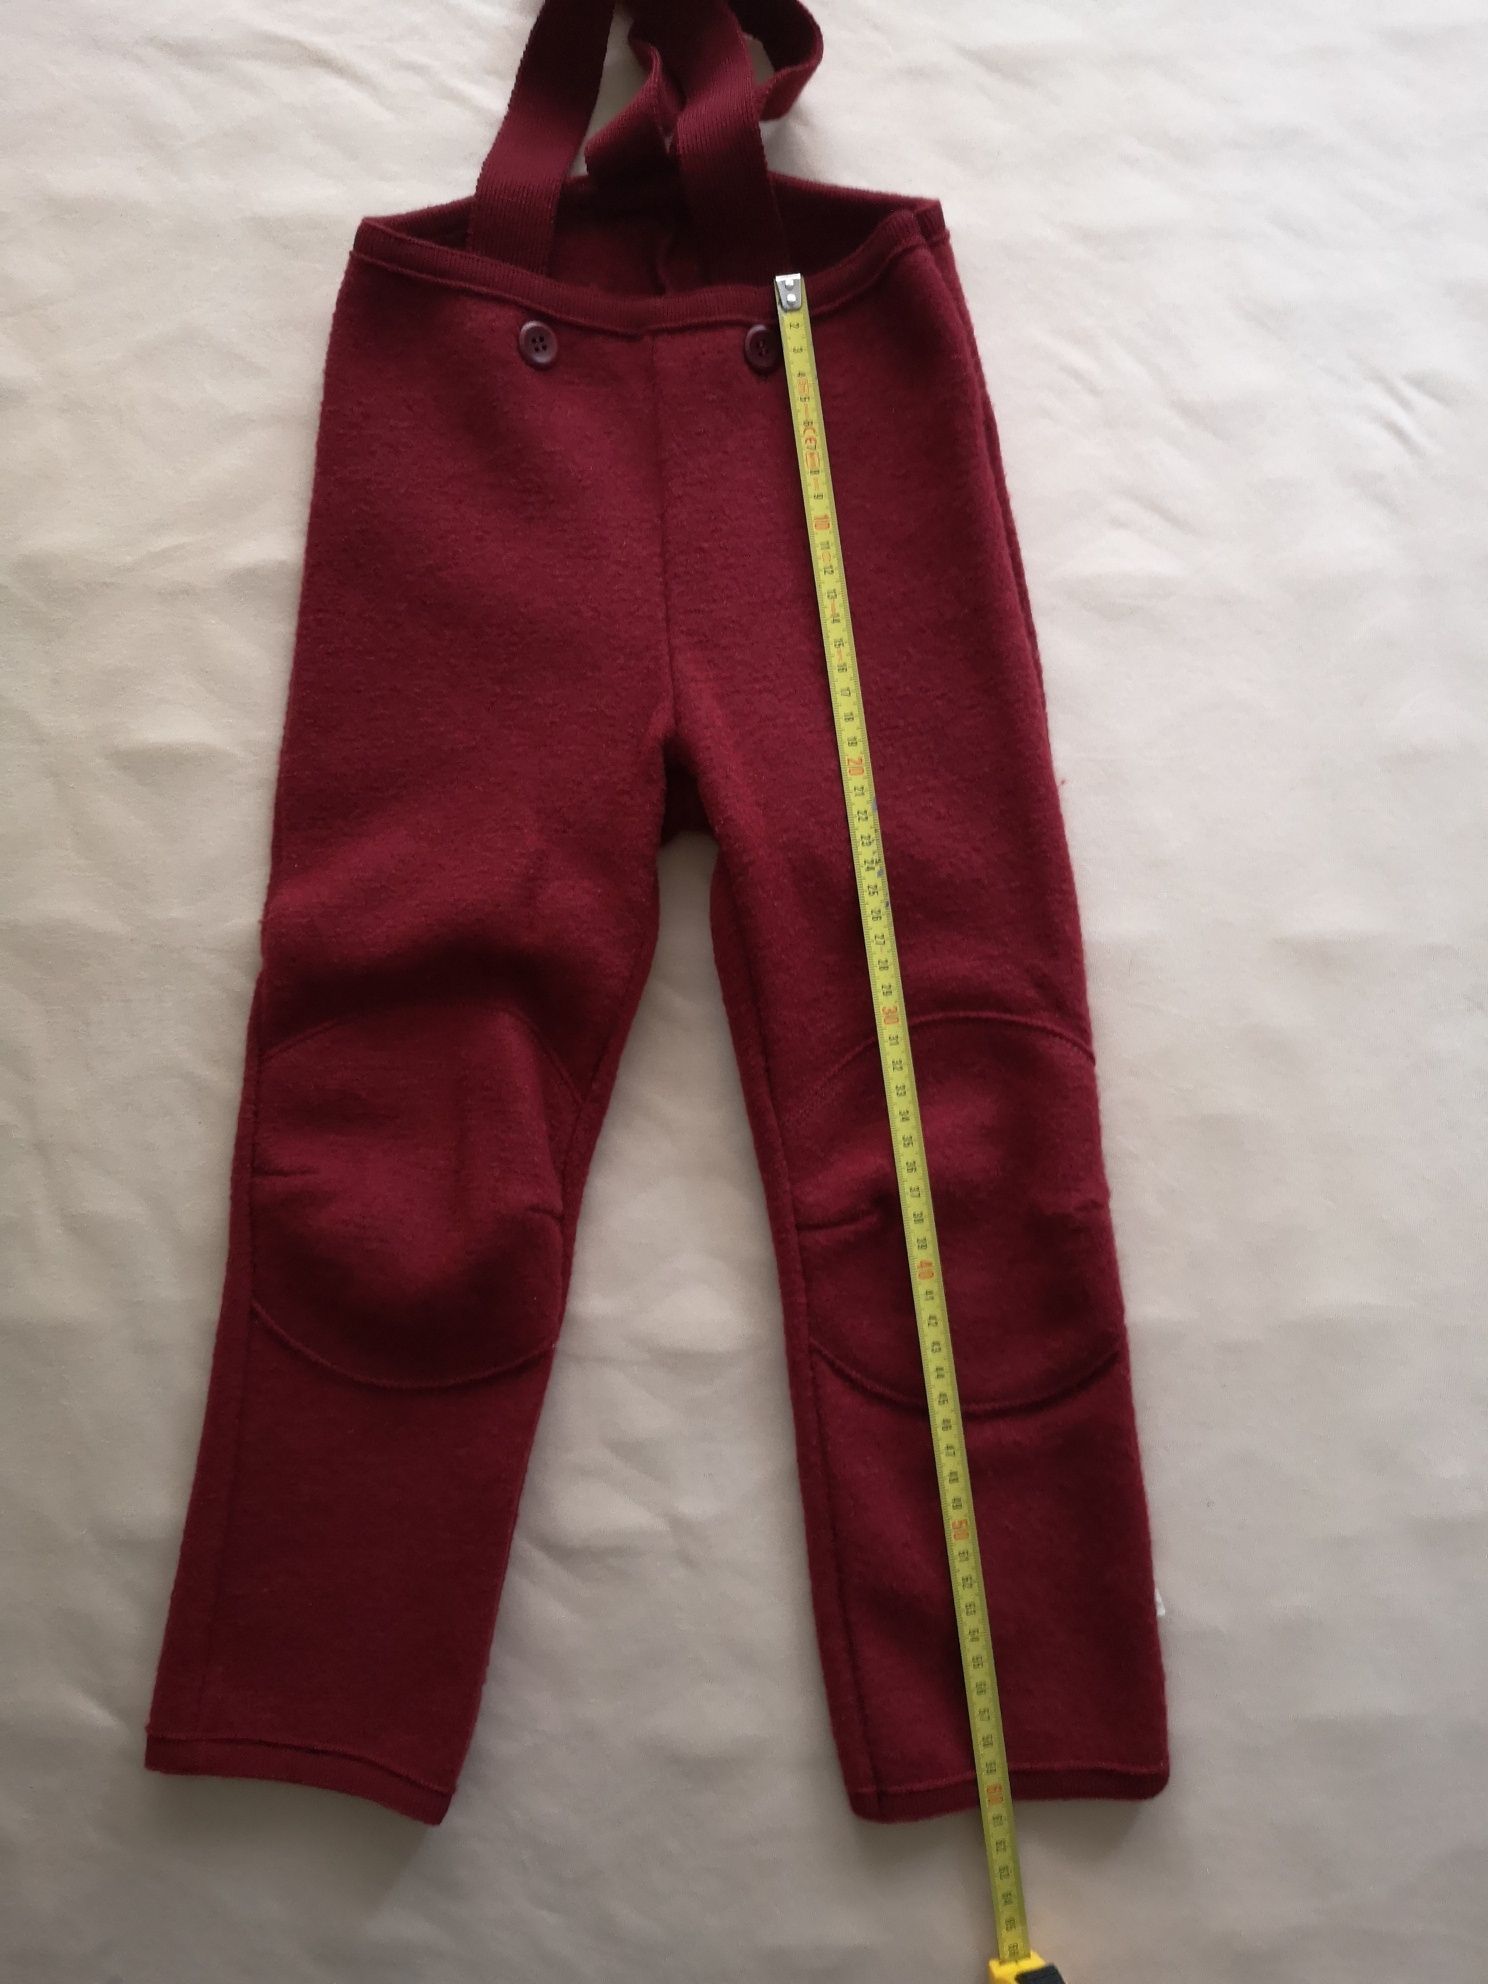 Pantaloni Disana, 100% lana, mar 98-104, 2-3 ani, impecabili